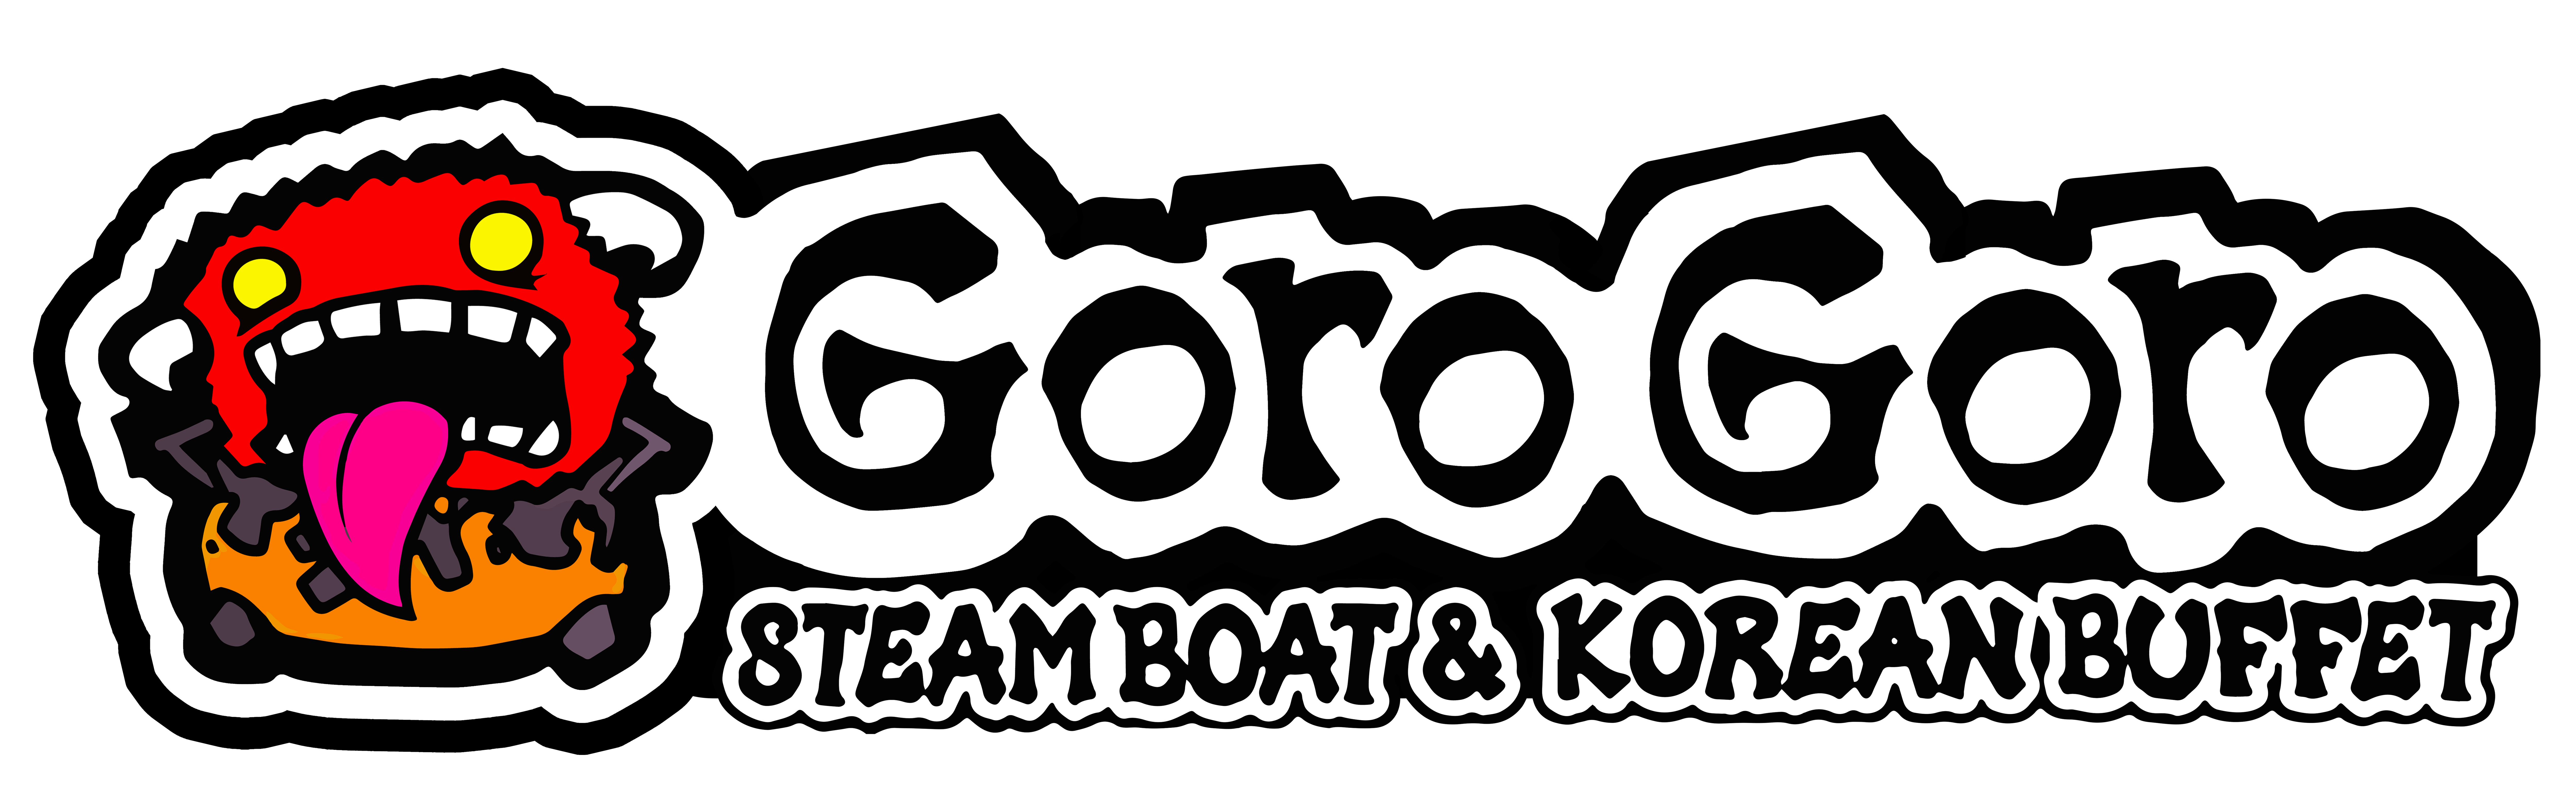 GoroGoro Steamboat & Korean Buffet - Logo